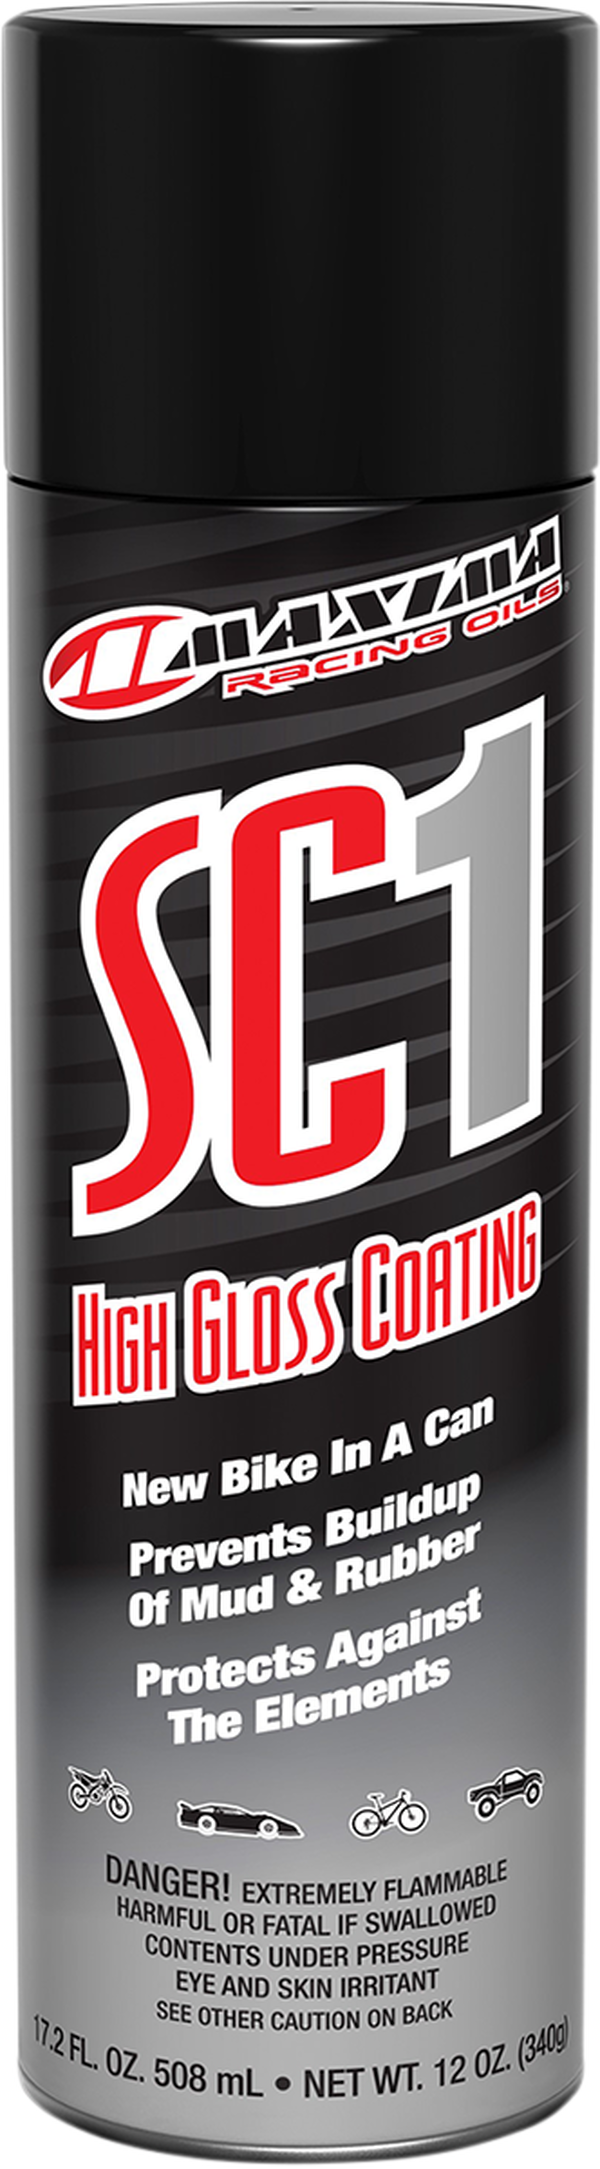 MAXIMA RACING OIL SC1 High Gloss Coating – spray siliconico per rifiniture